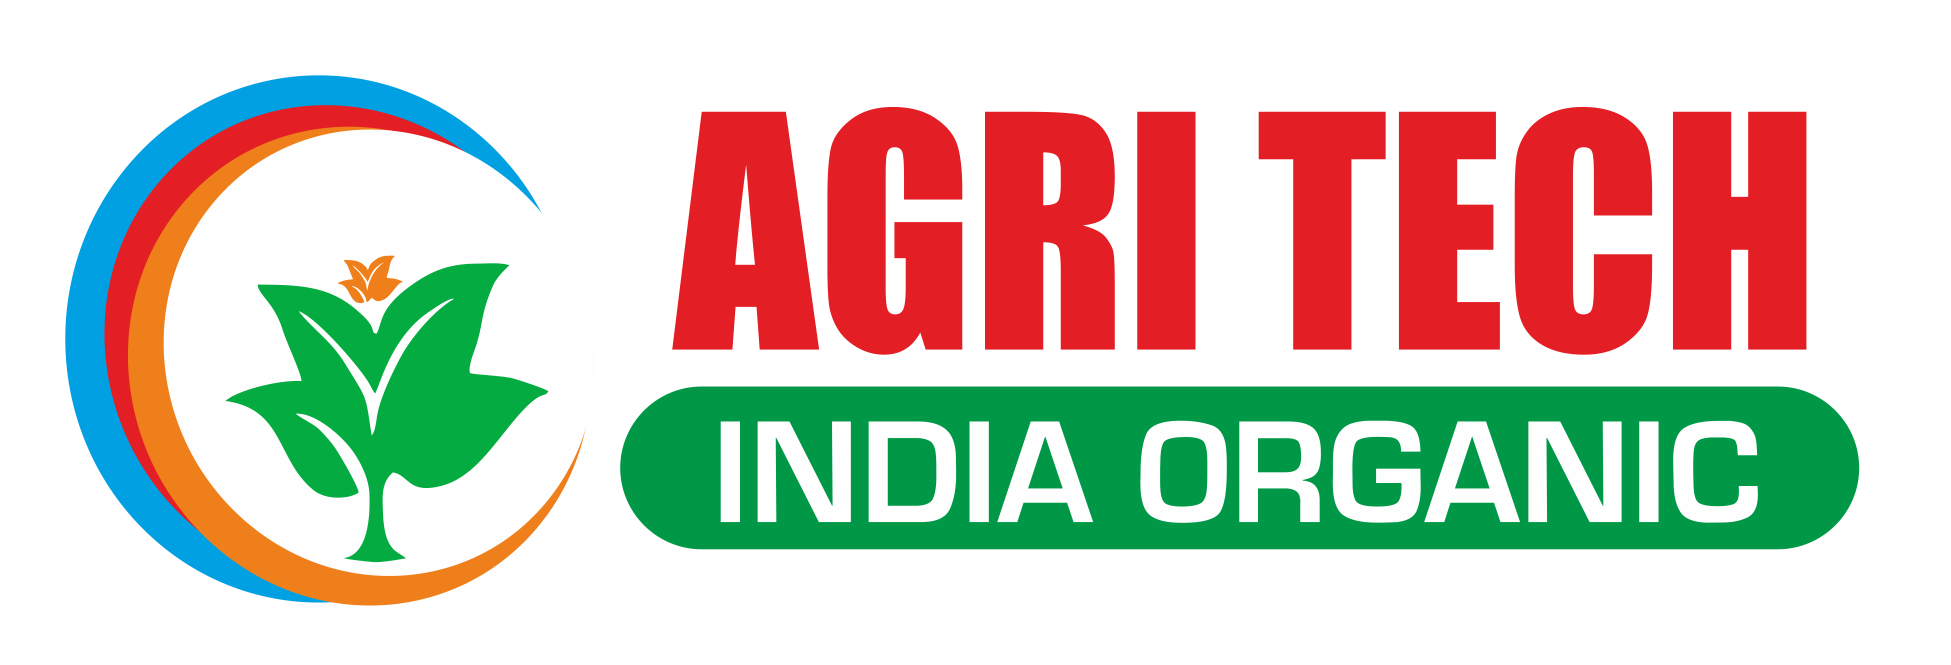 Agritech India Organic